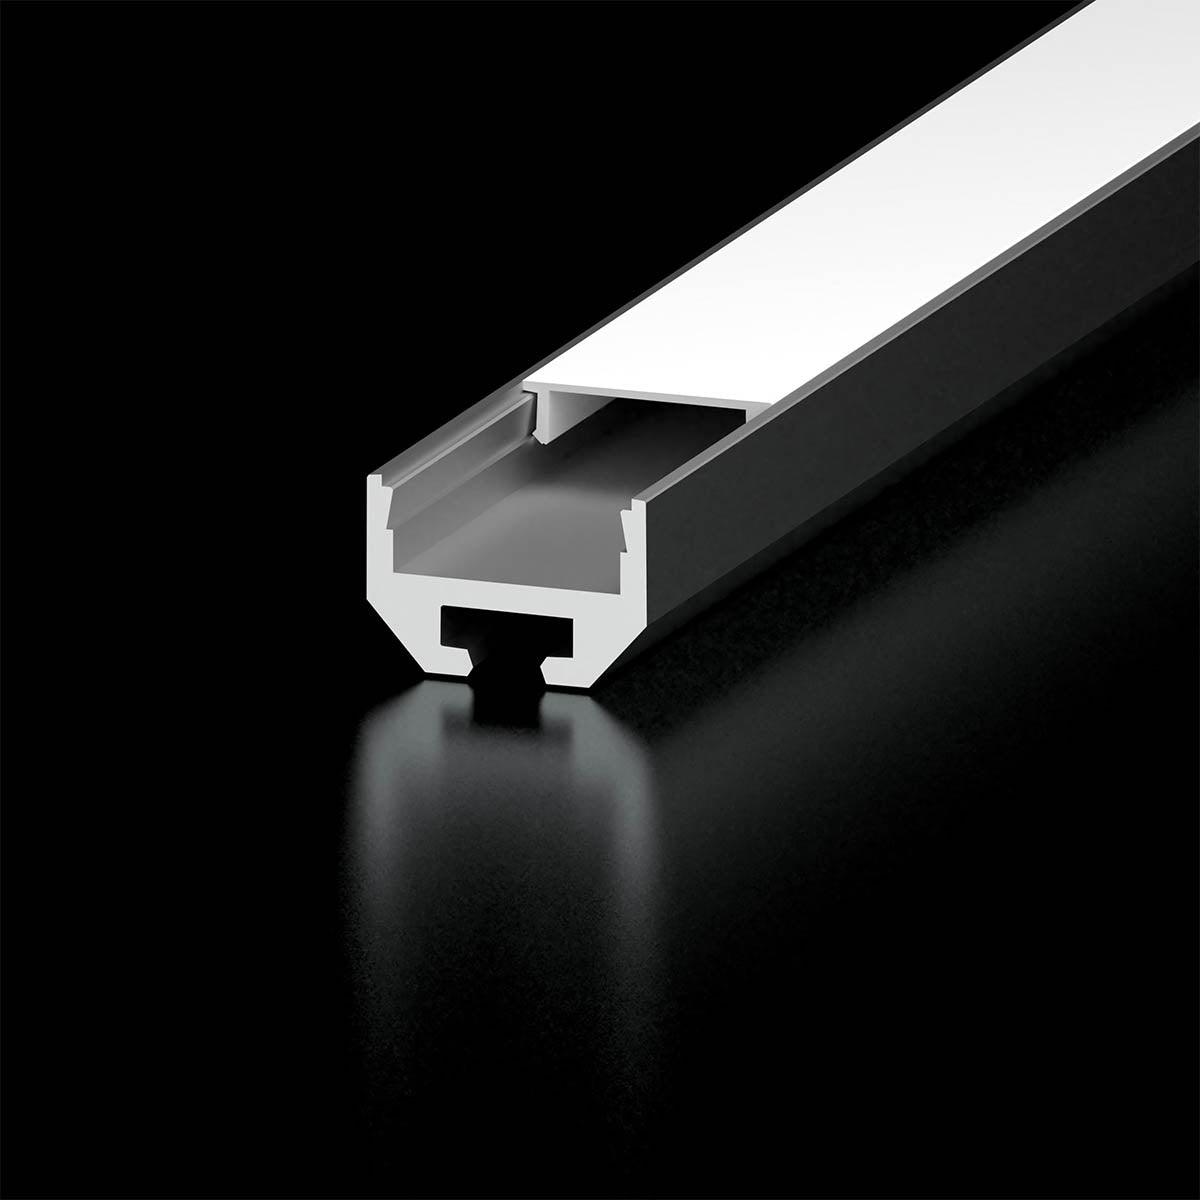 48in. Chromapath Builder, Square LED Aluminum Channels for 12mm strip lights